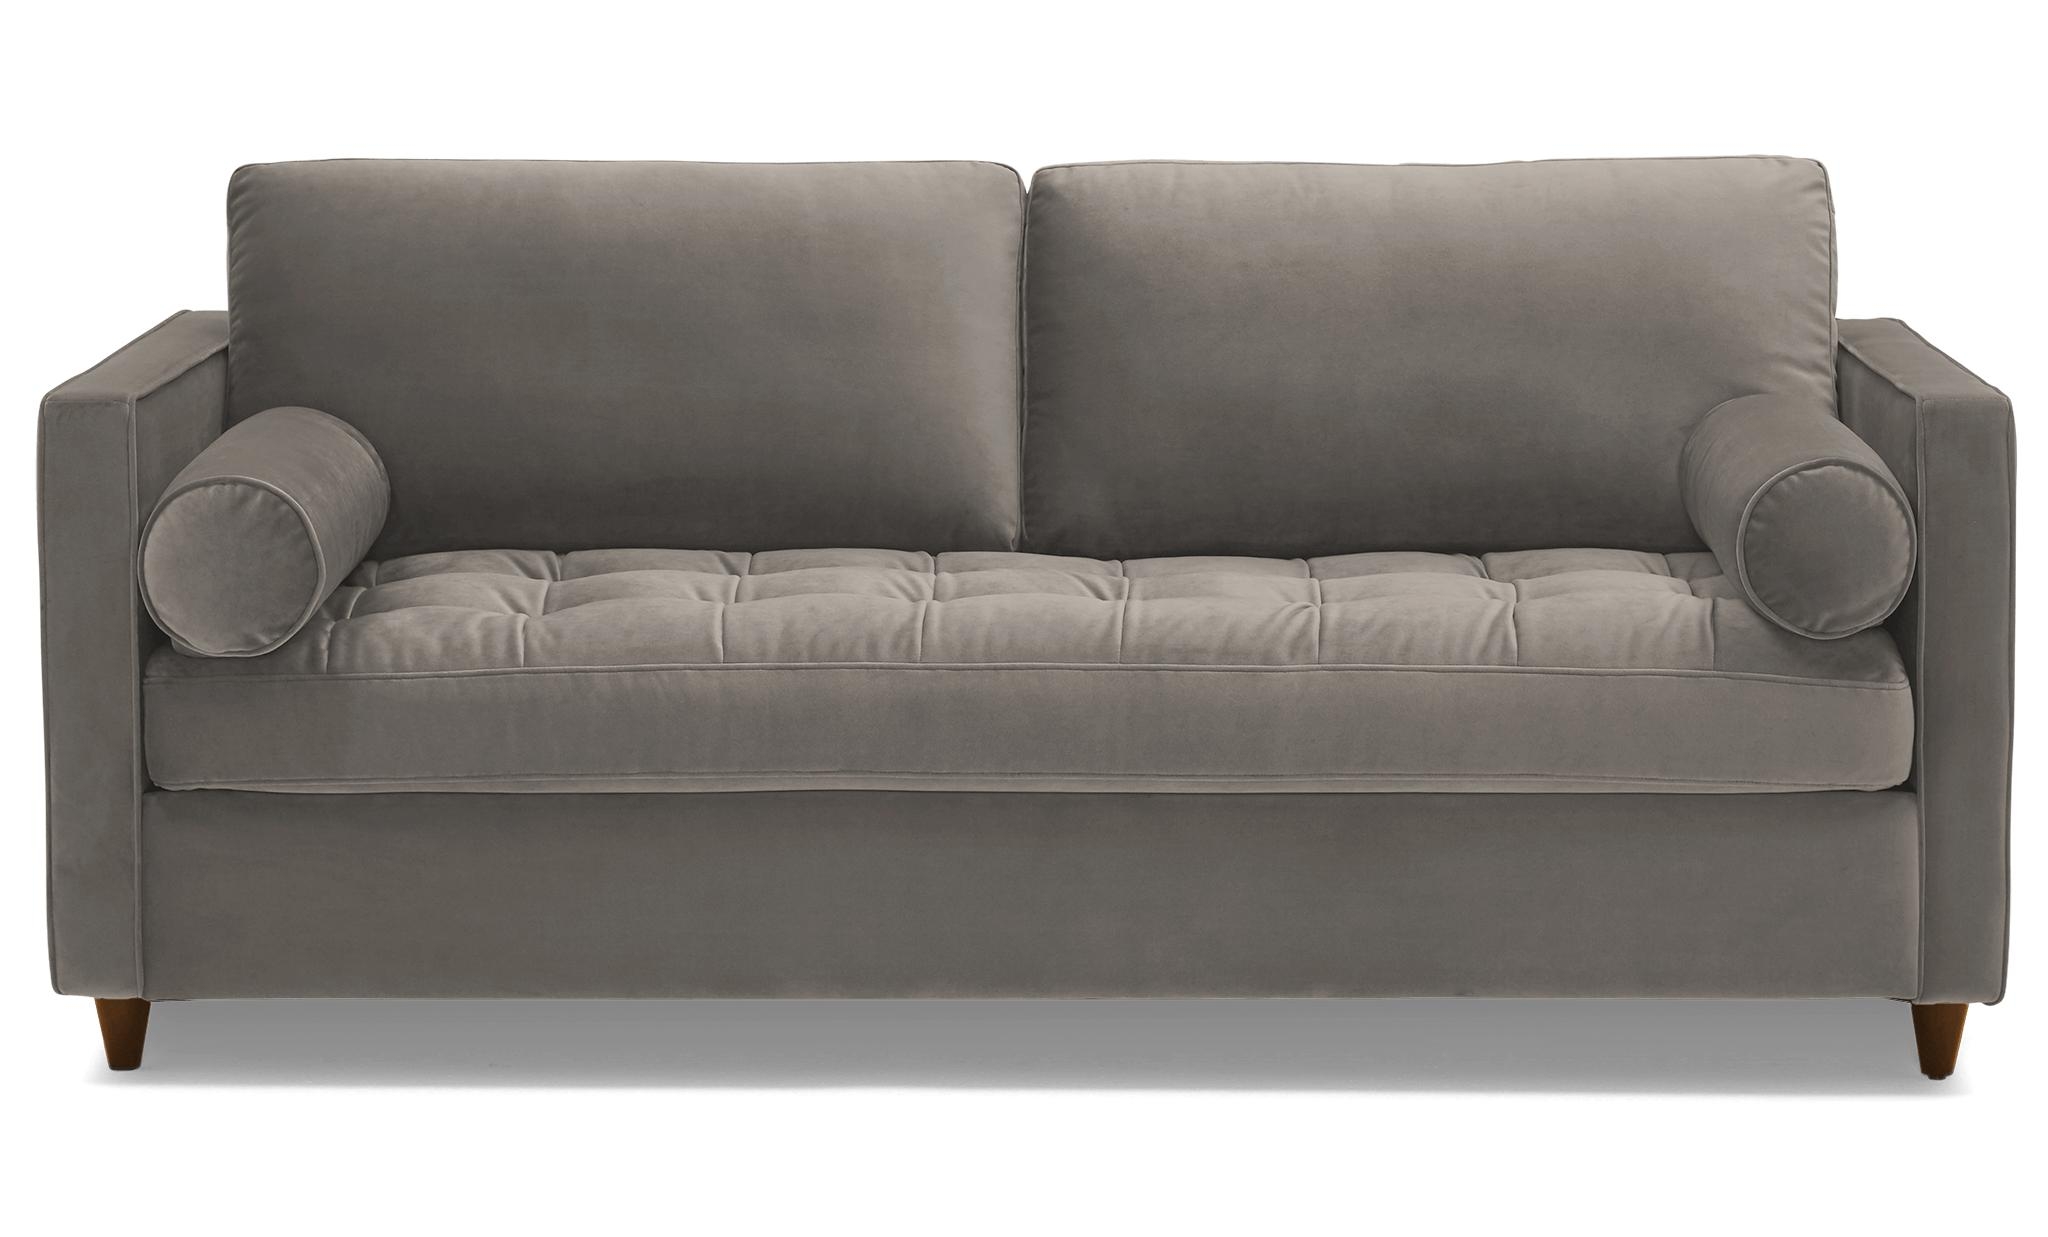 Beige/White Briar Mid Century Modern Sleeper Sofa - Prime Stone - Mocha - Image 0